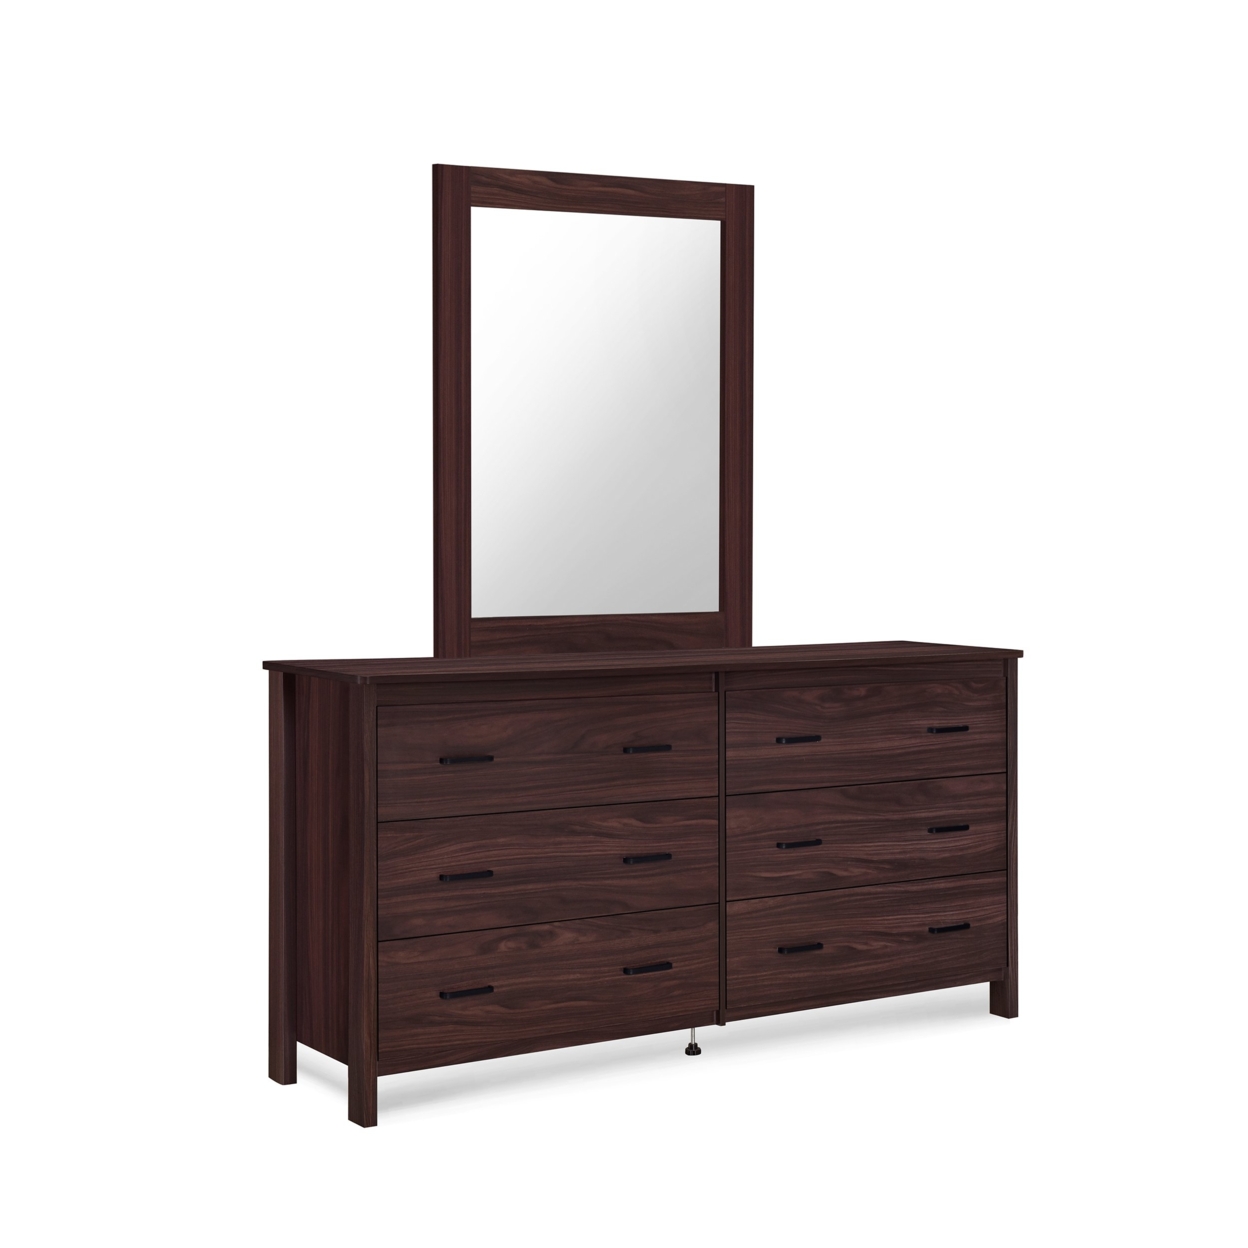 Titeca Contemporary 6 Drawer Vanity Dresser With Rectangular Mirror - Wenge/silver